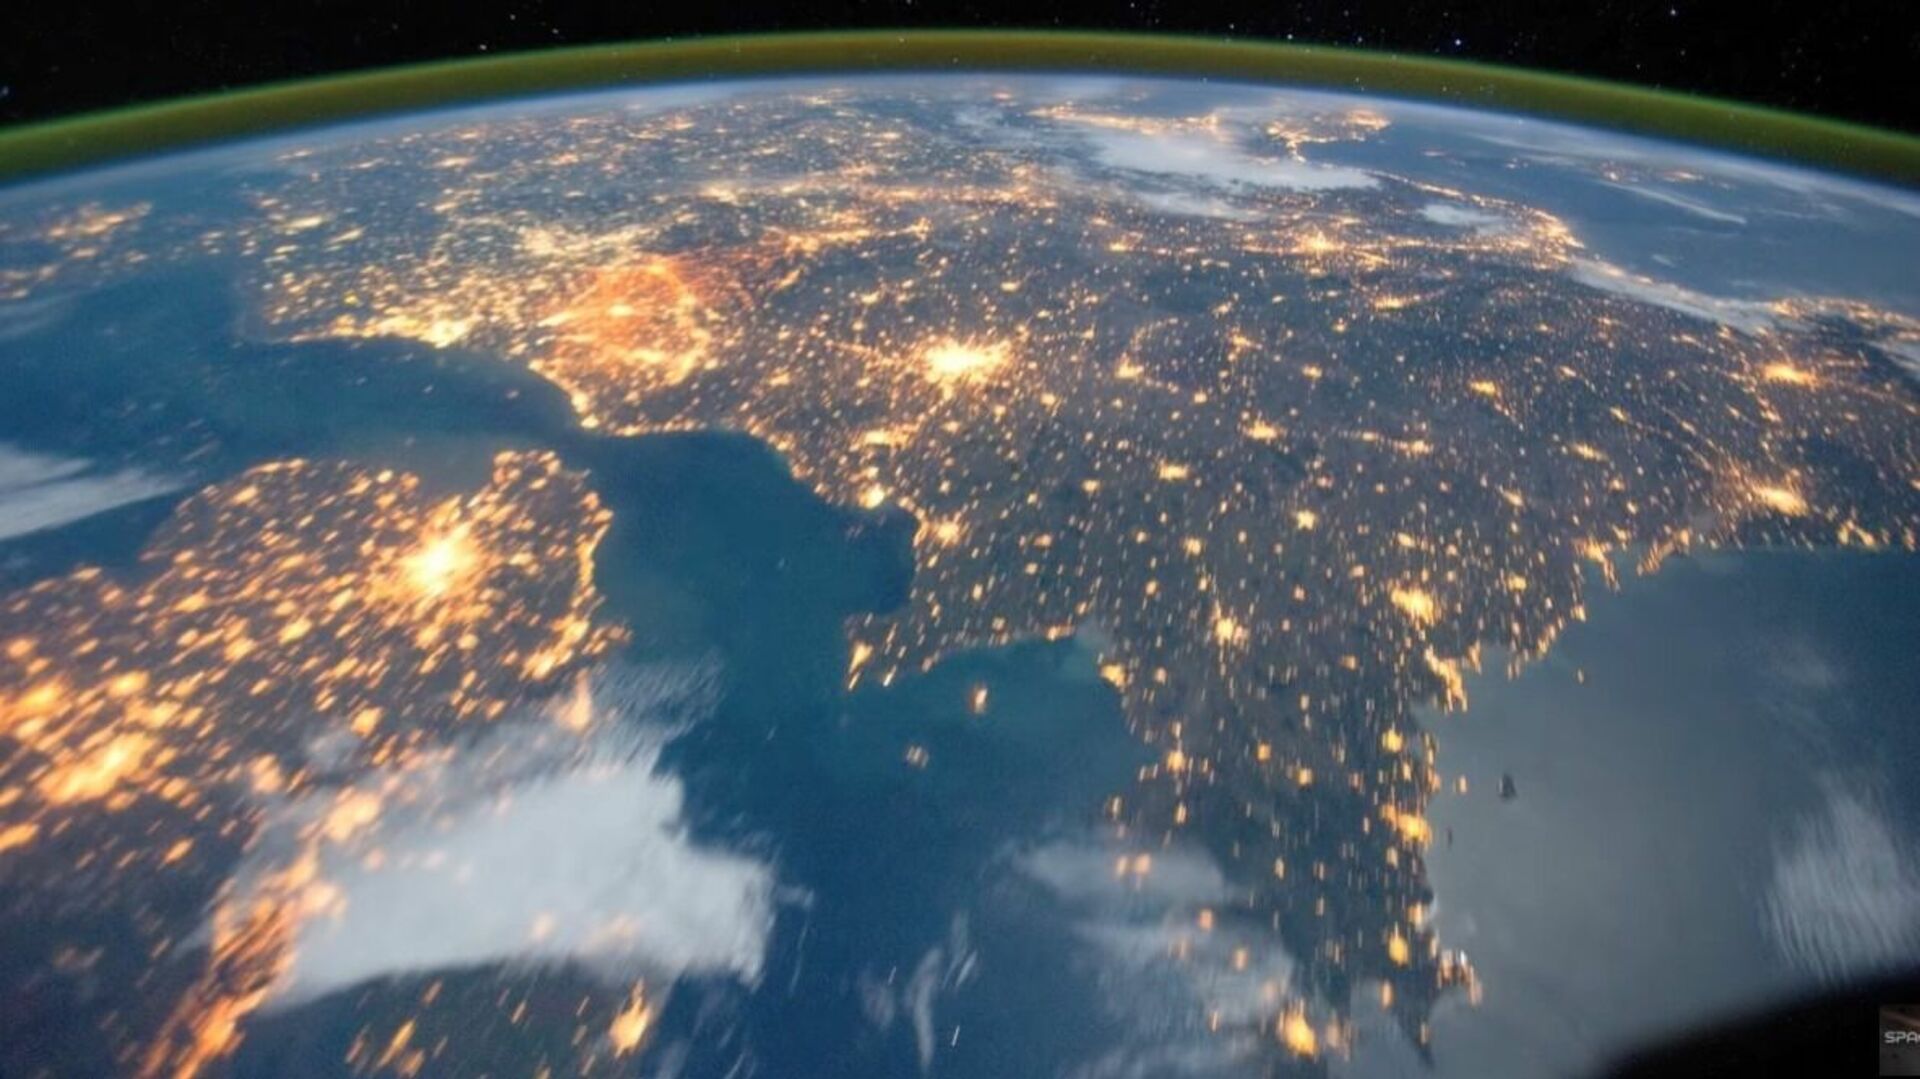 Space view. Земля из космоса. Вид земли из космоса. Россия из космоса. Реальные снимки земли из космоса.